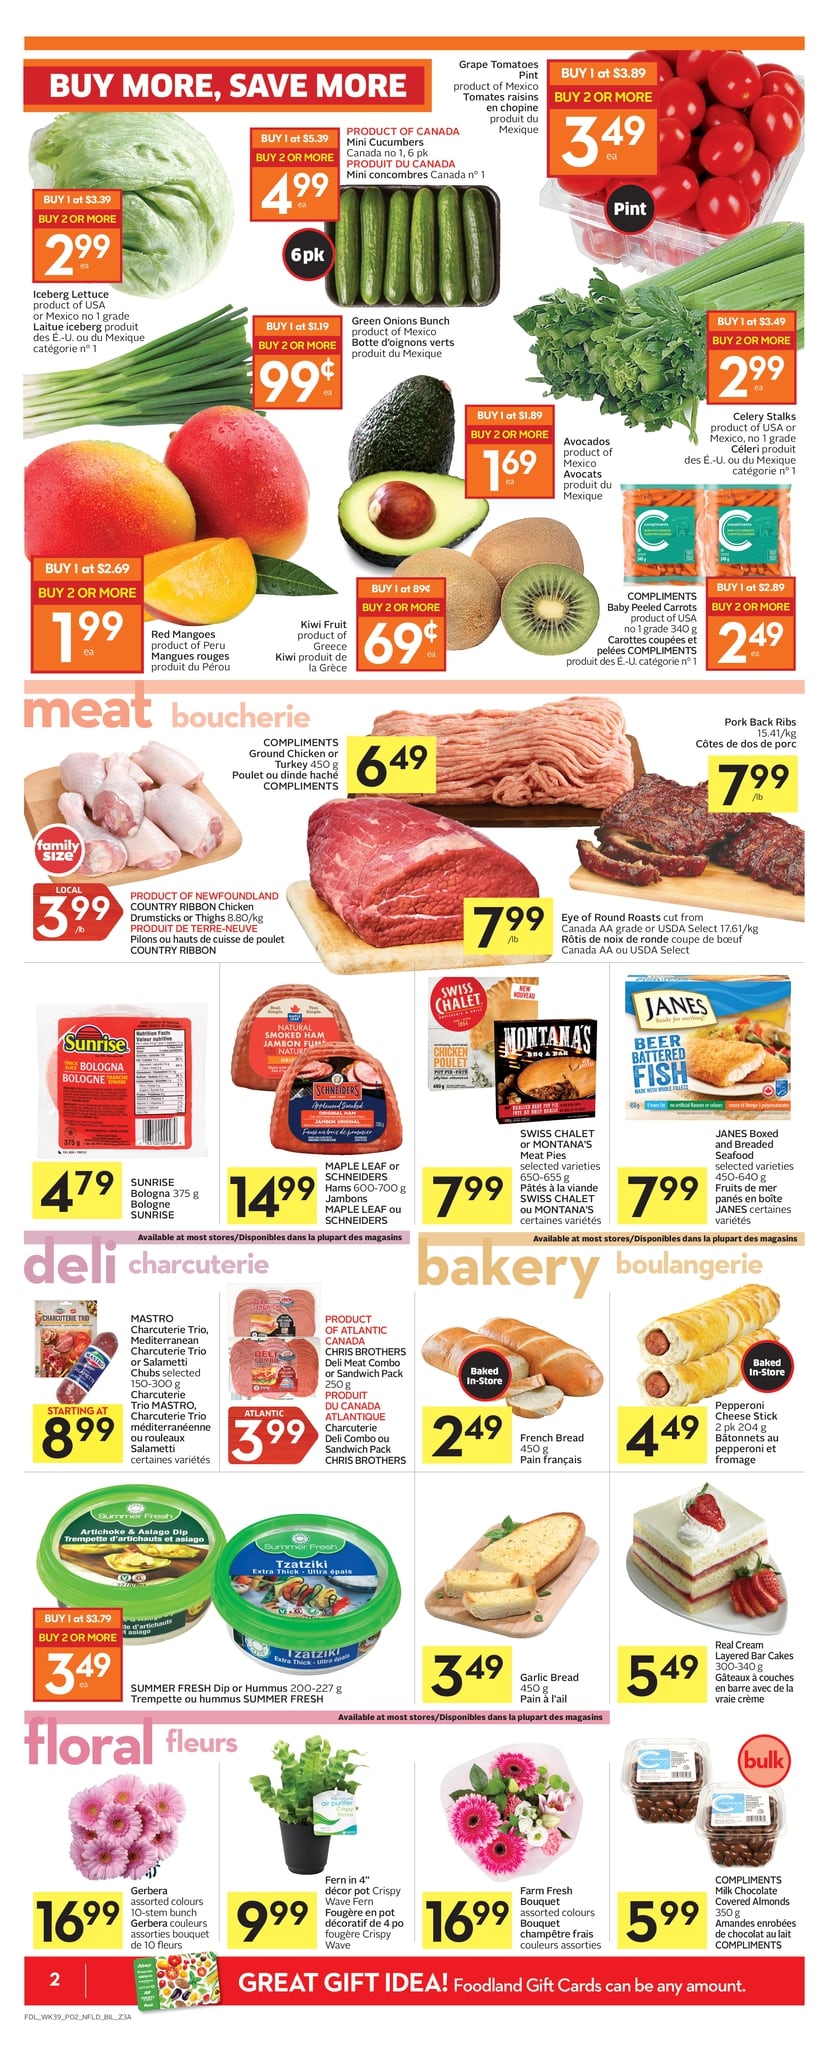 Foodland - Weekly Flyer Specials - Page 2